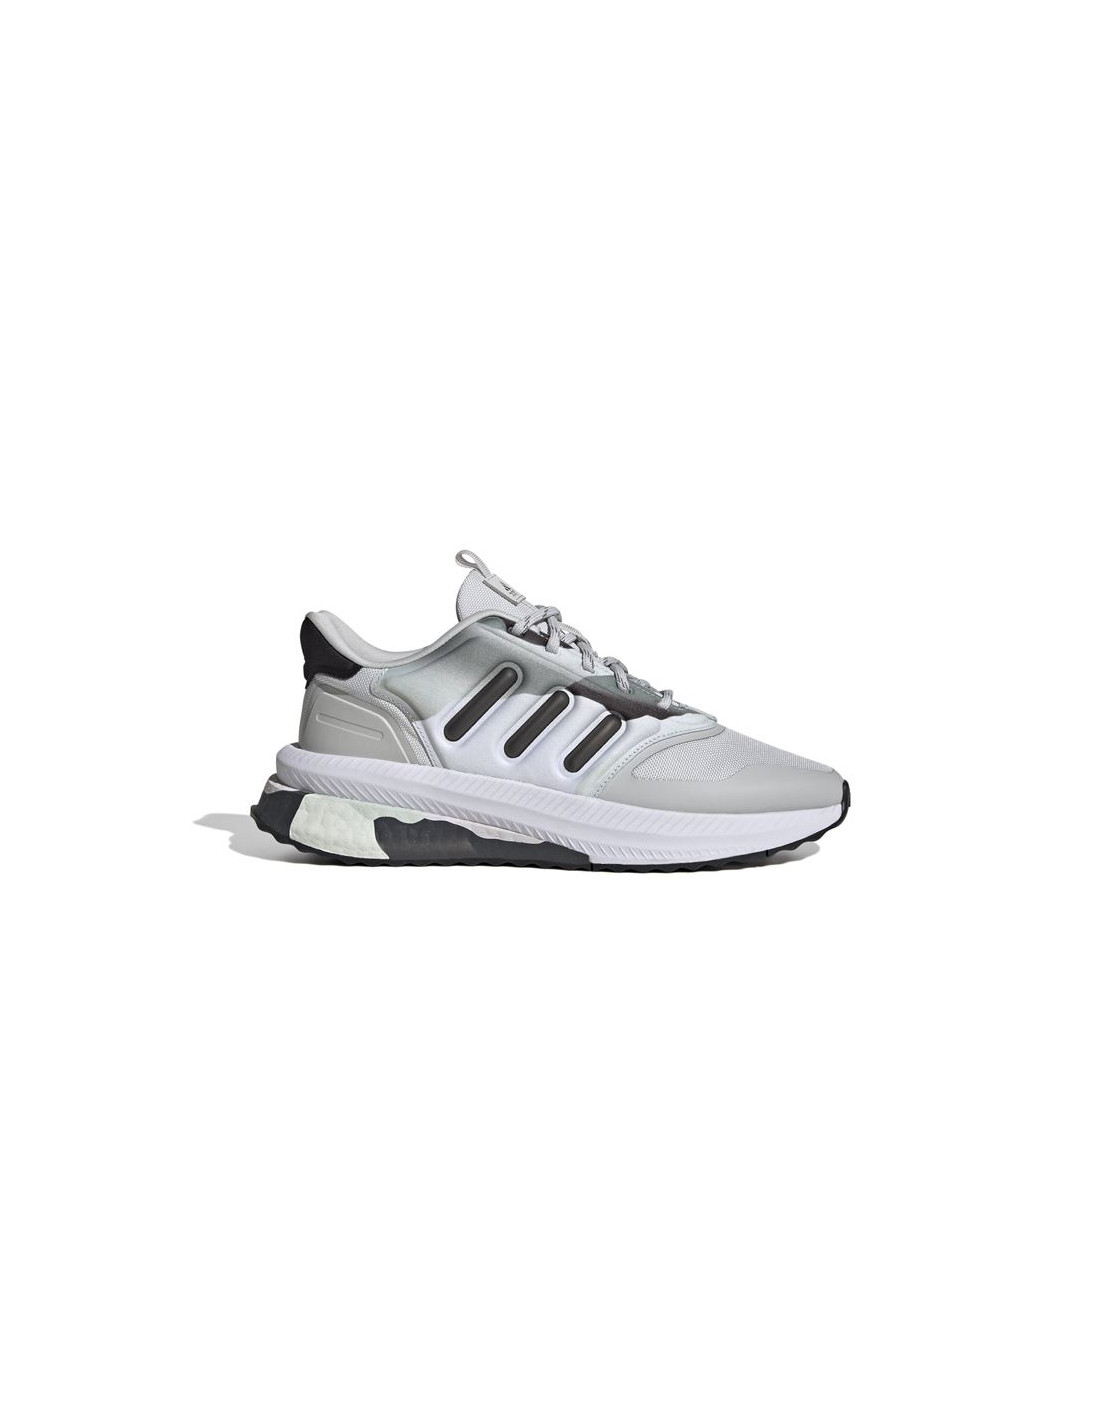 Chaussures de running x-plrphase noir homme - Adidas